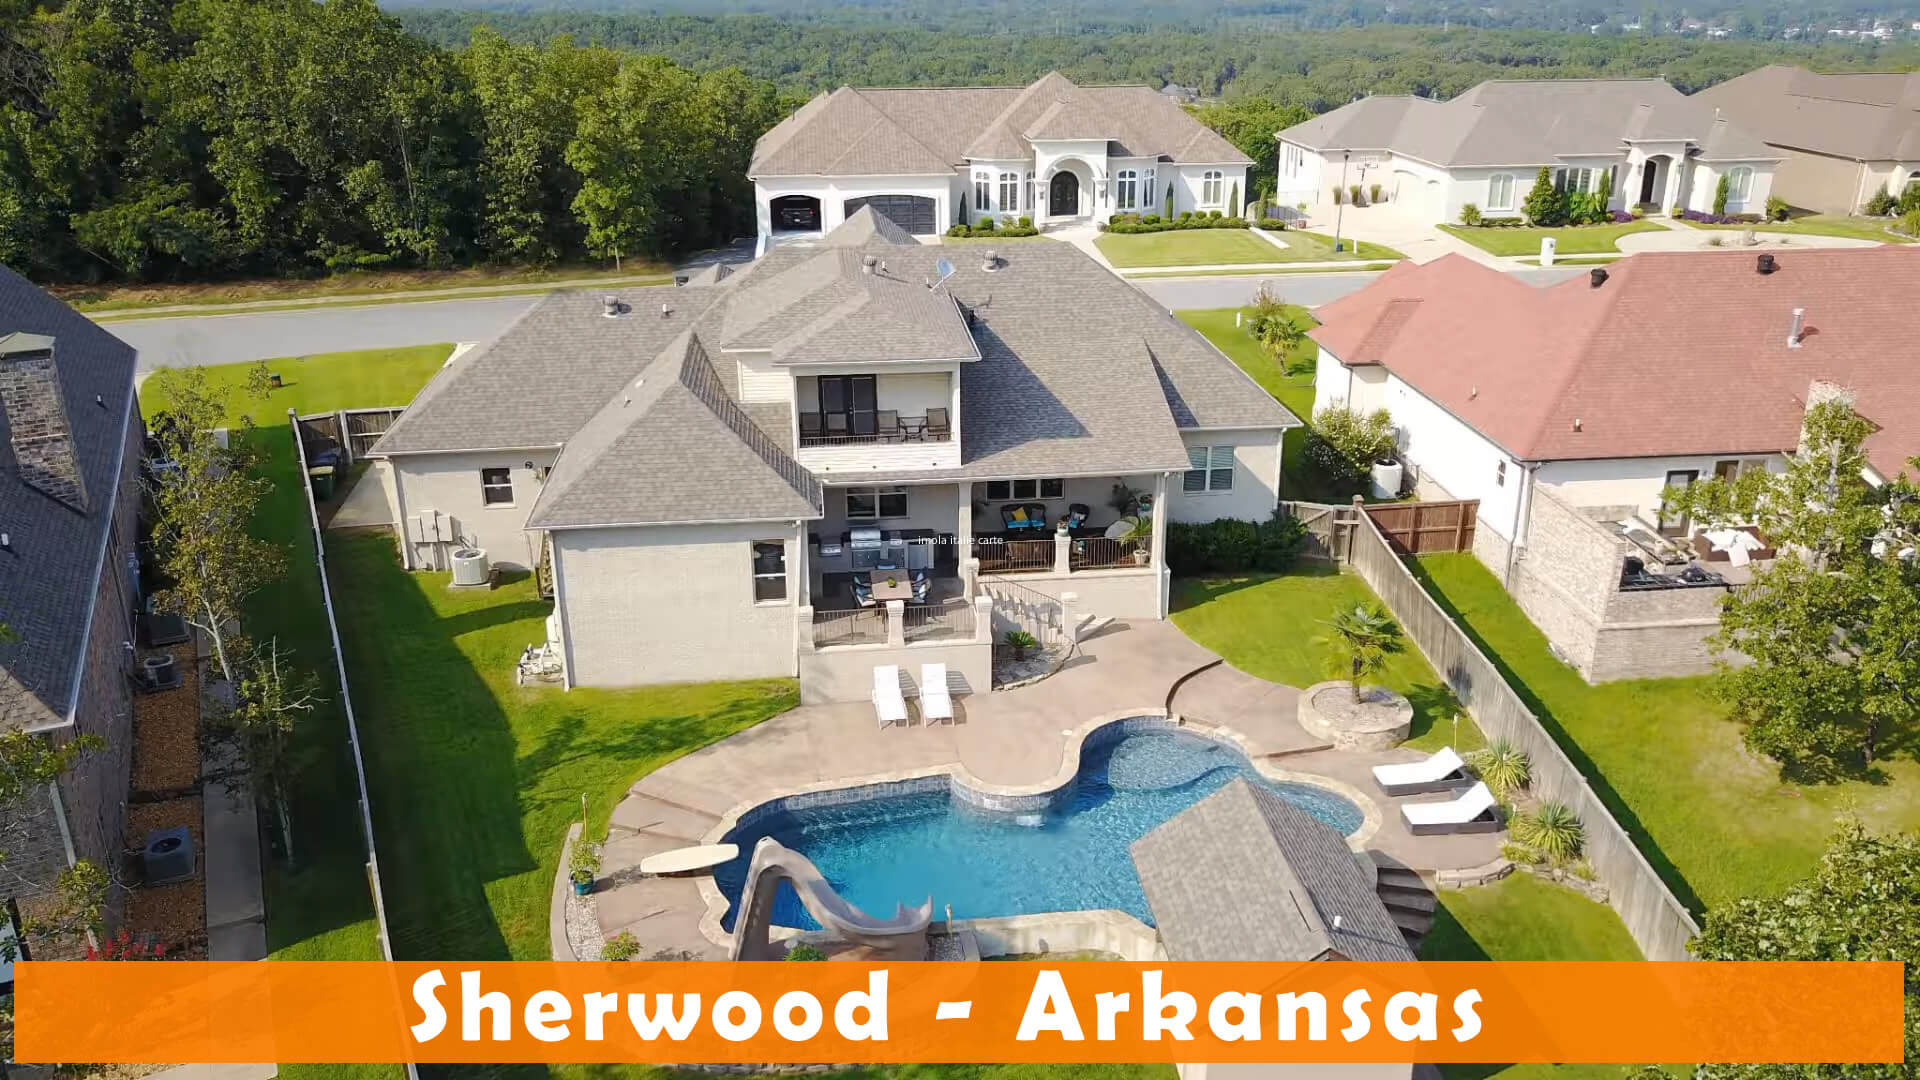 Sherwood Arkansas